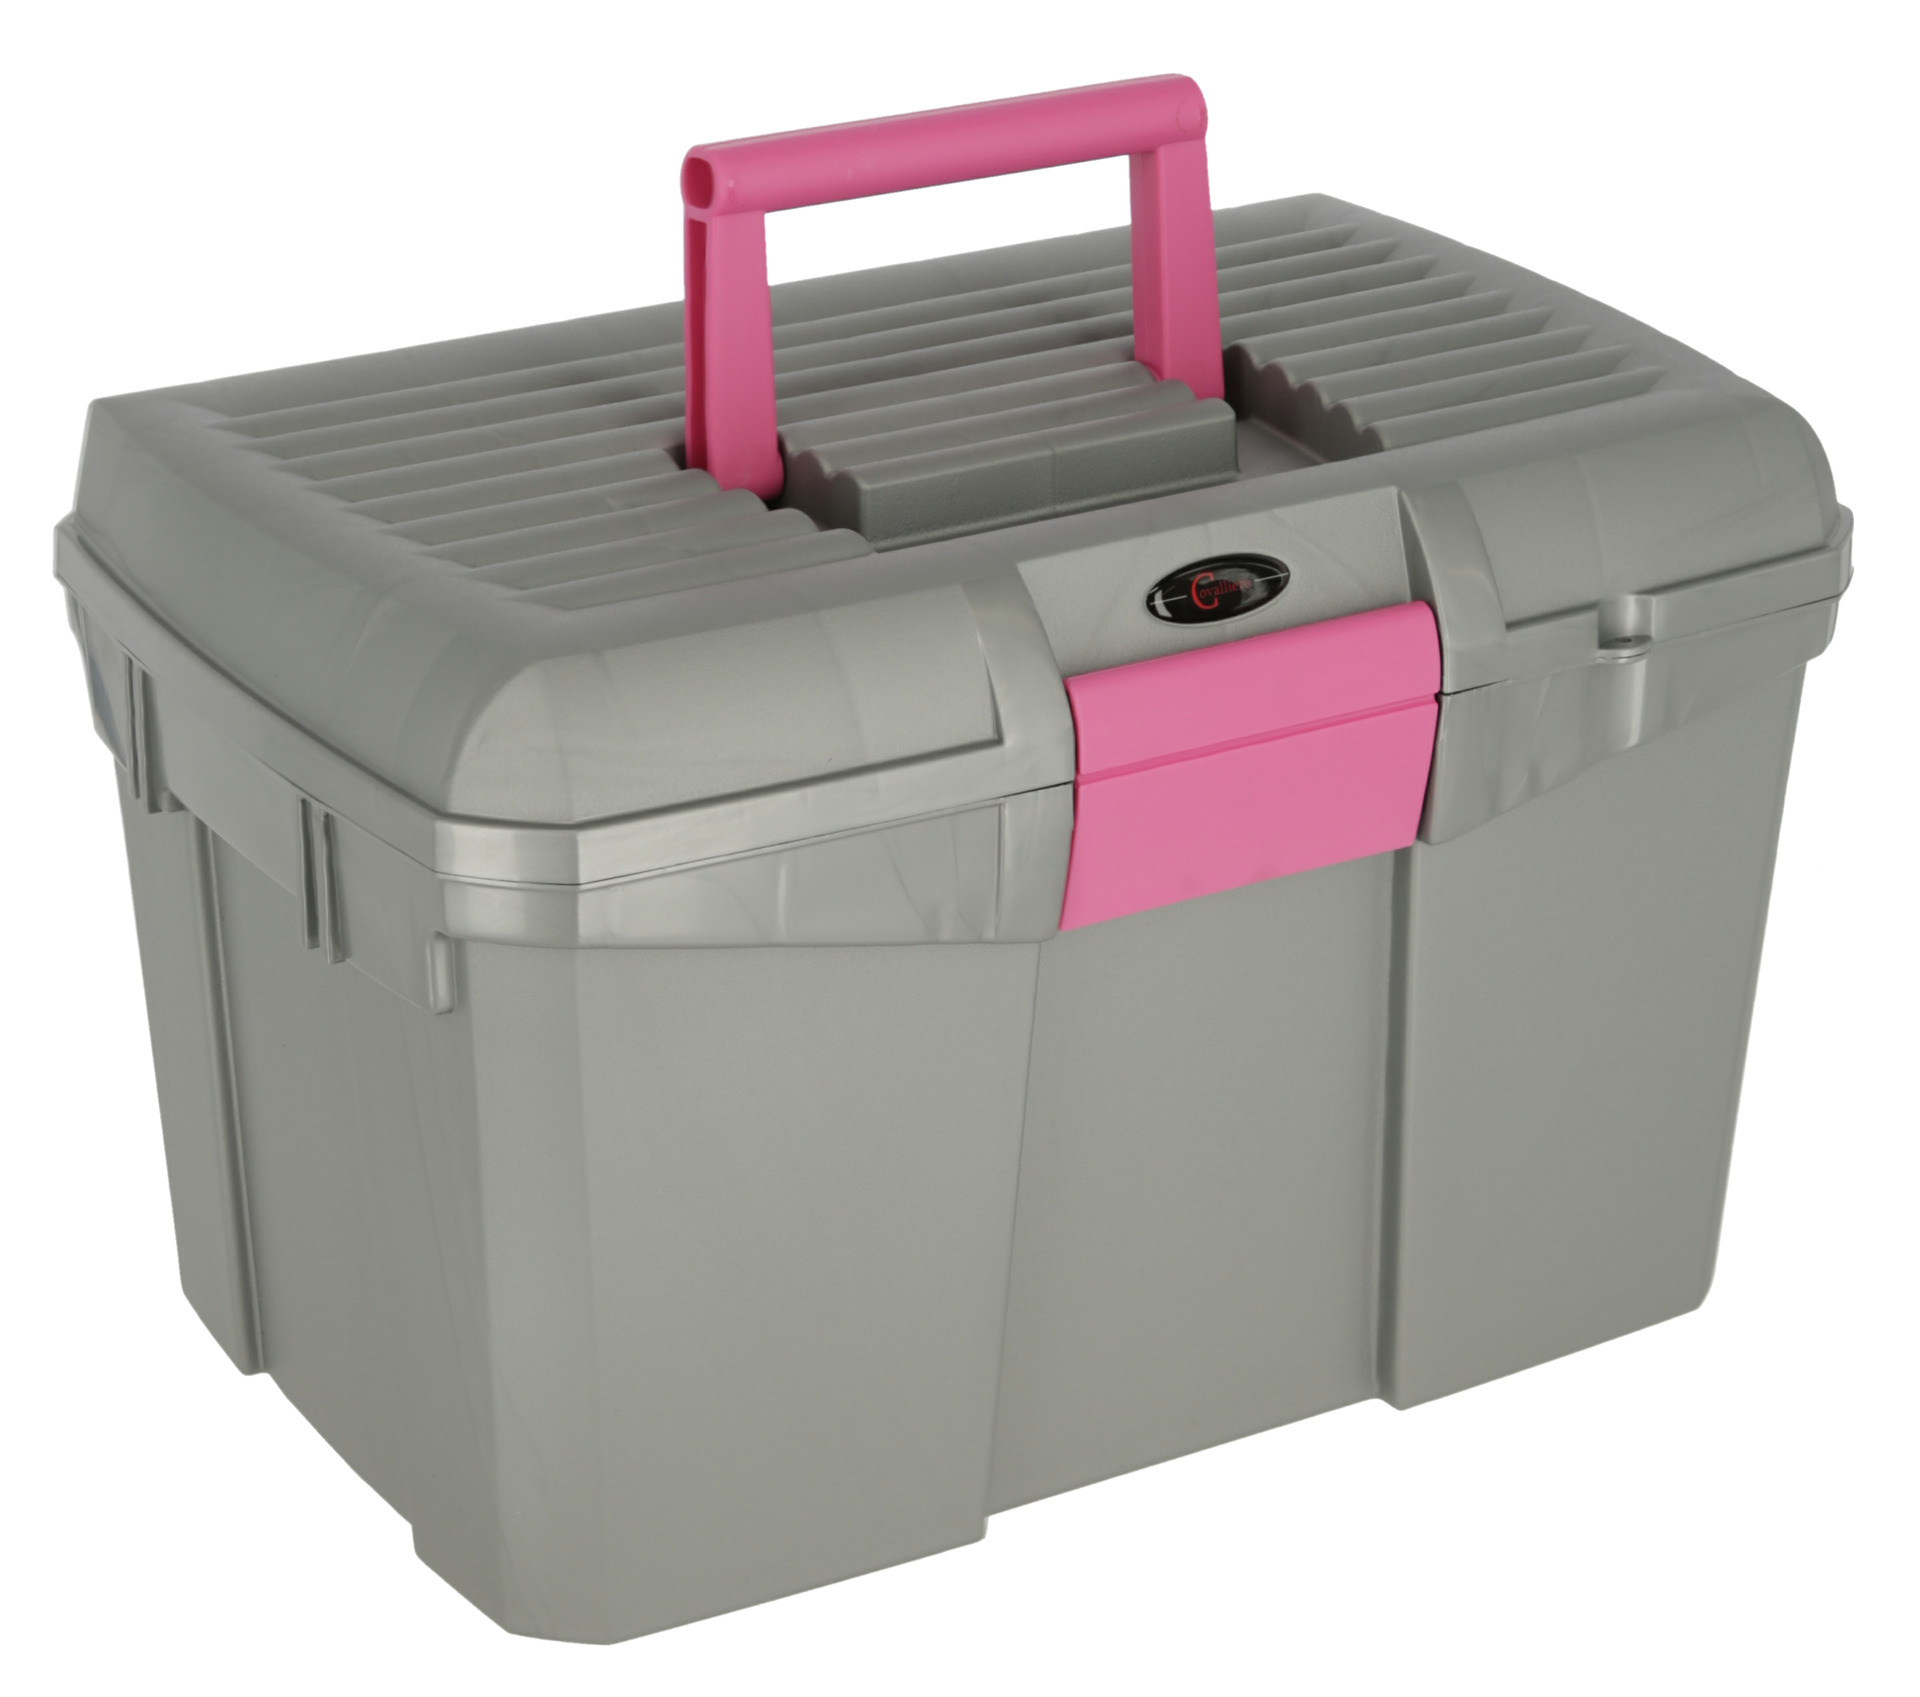 Kerbl Putzbox Siena grau/pink